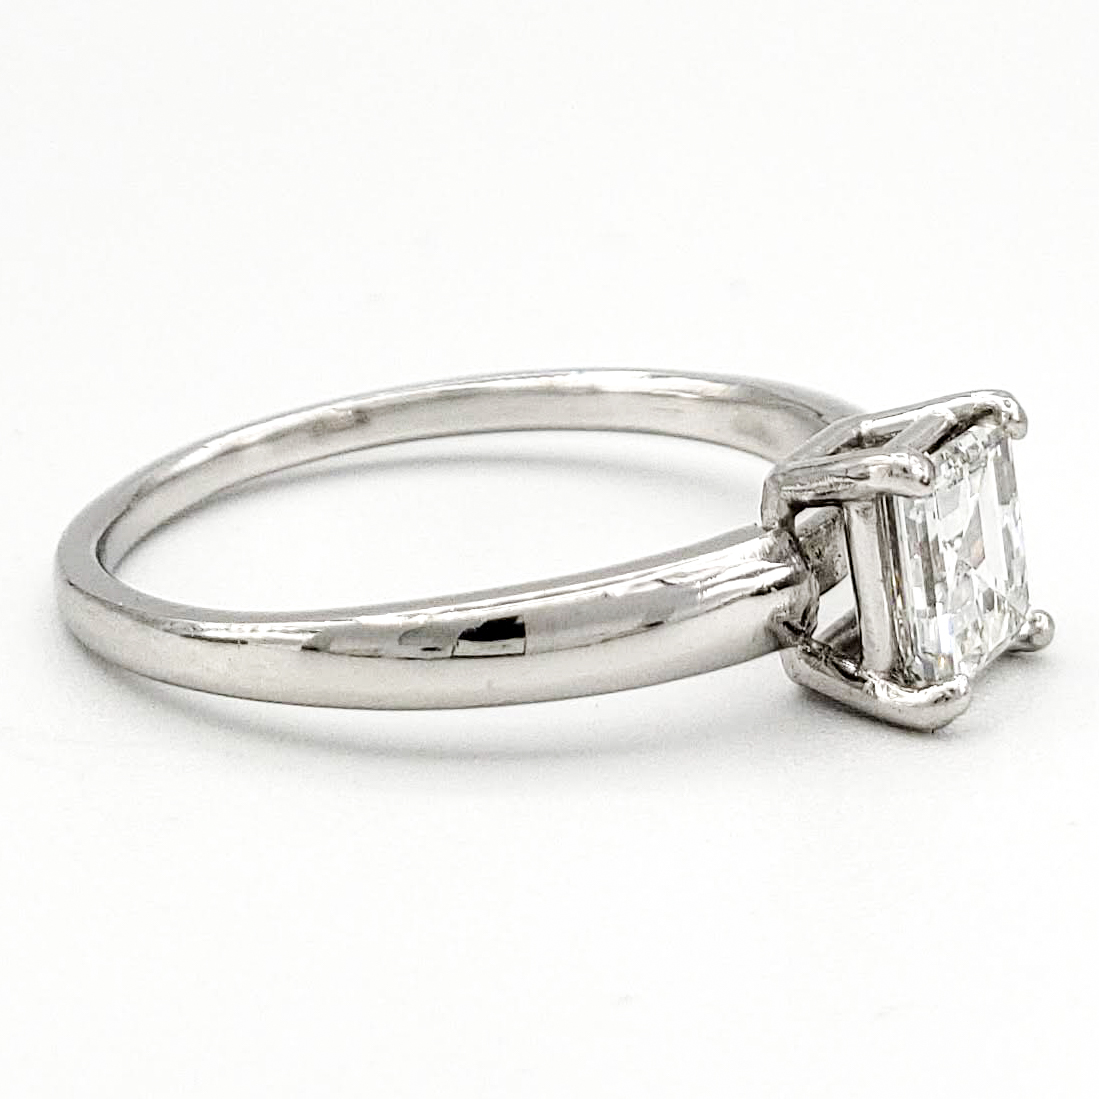 vintage-platinum-engagement-ring-with-0-58-carat-square-step-cut-diamond-gia-f-vs1